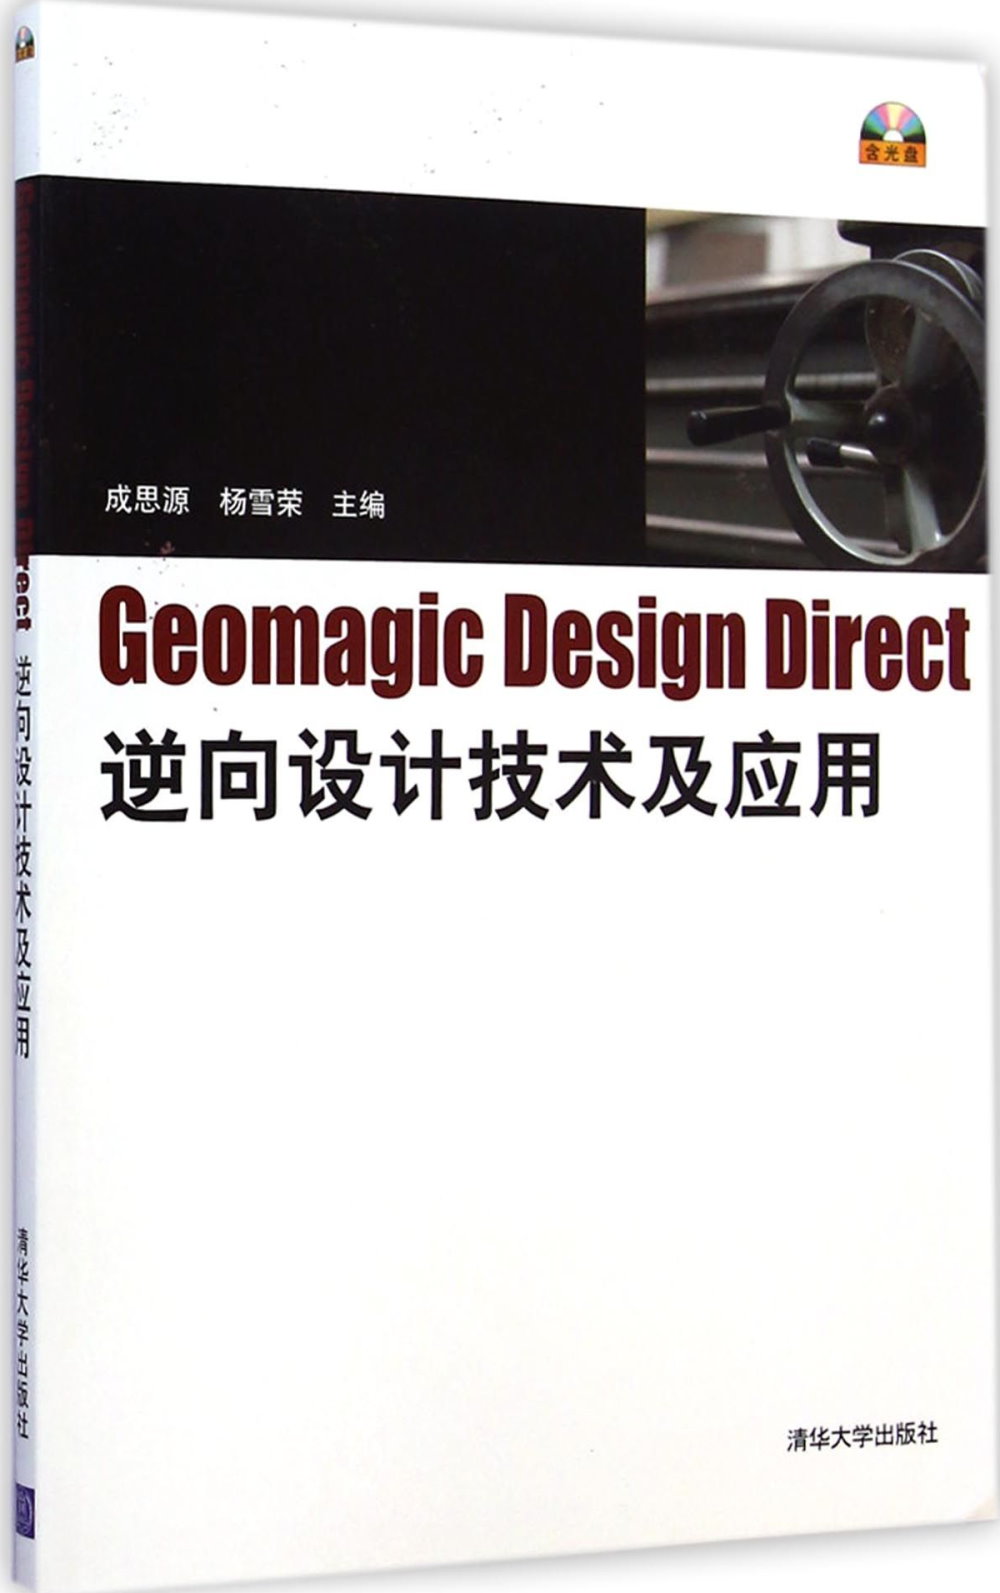 Geomagic Design Direct逆向設計技術及應用